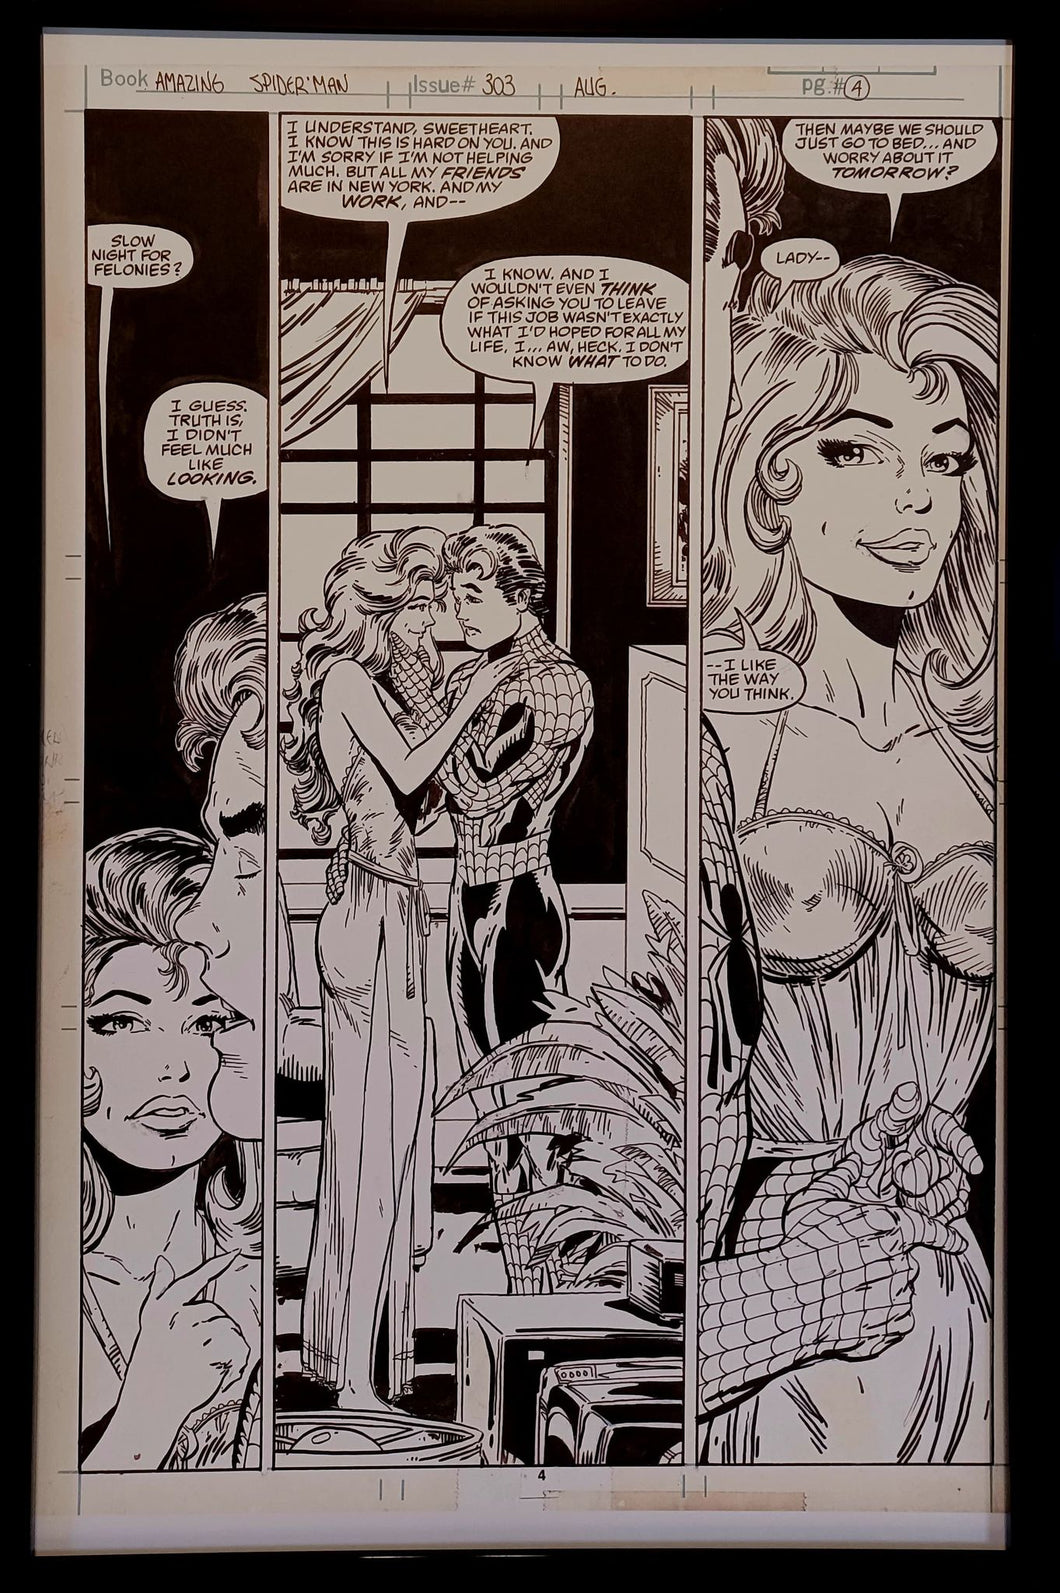 Amazing Spider-Man #303 pg. 4 by Todd McFarlane 11x17 FRAMED Original Art Print Comic Poster